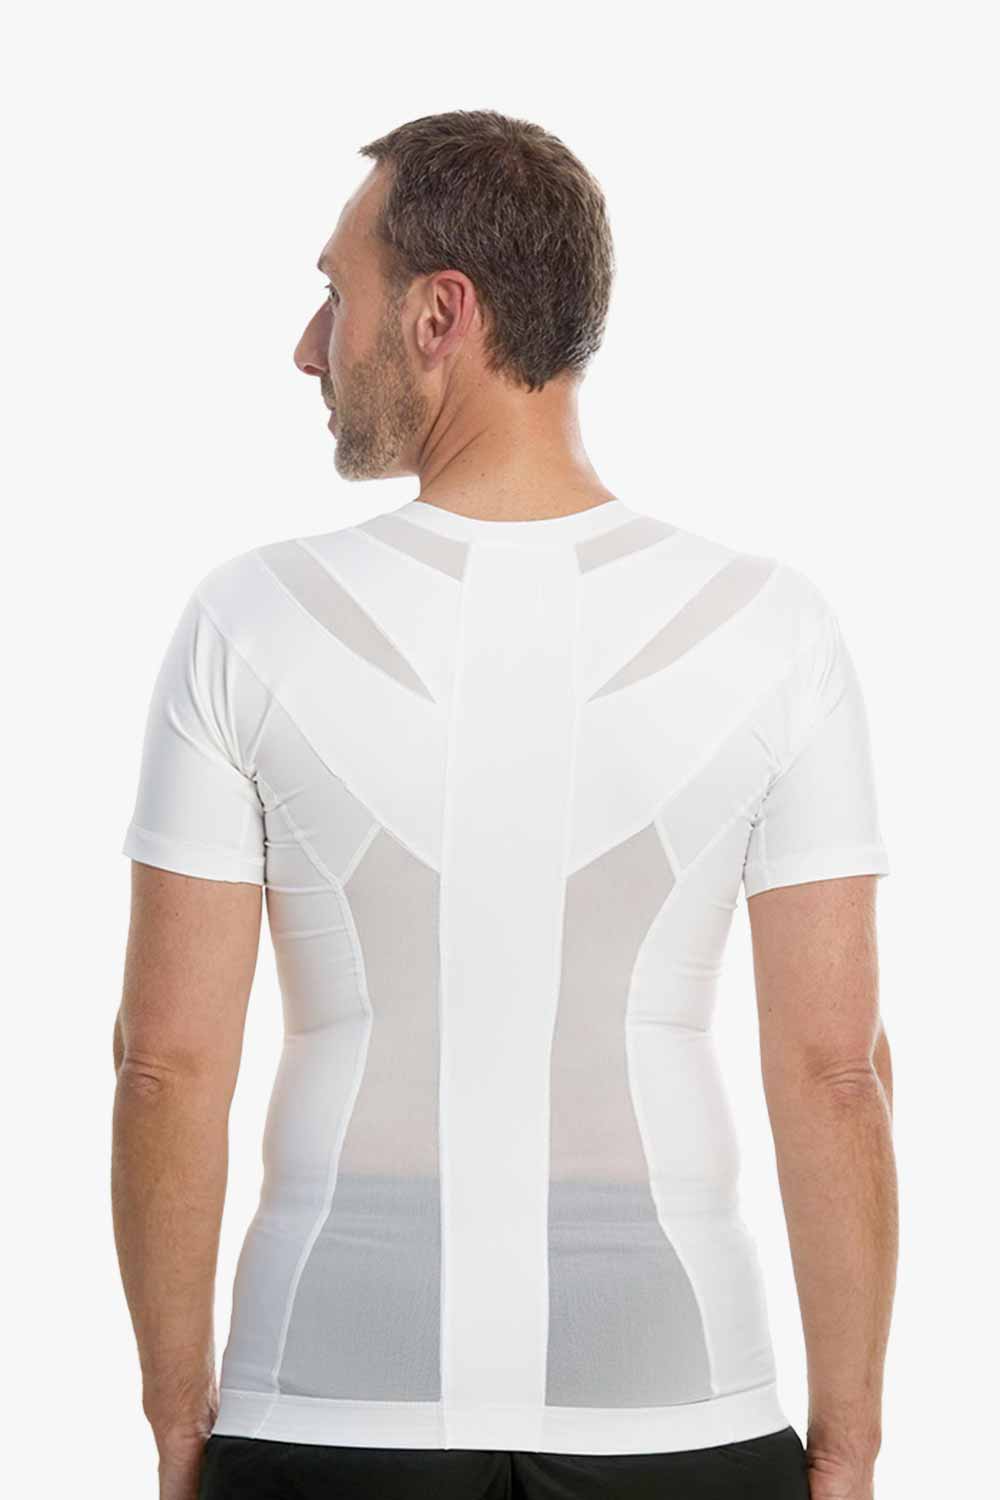 ALIGNMED Men's Posture Shirt - Aim Sports Medicine